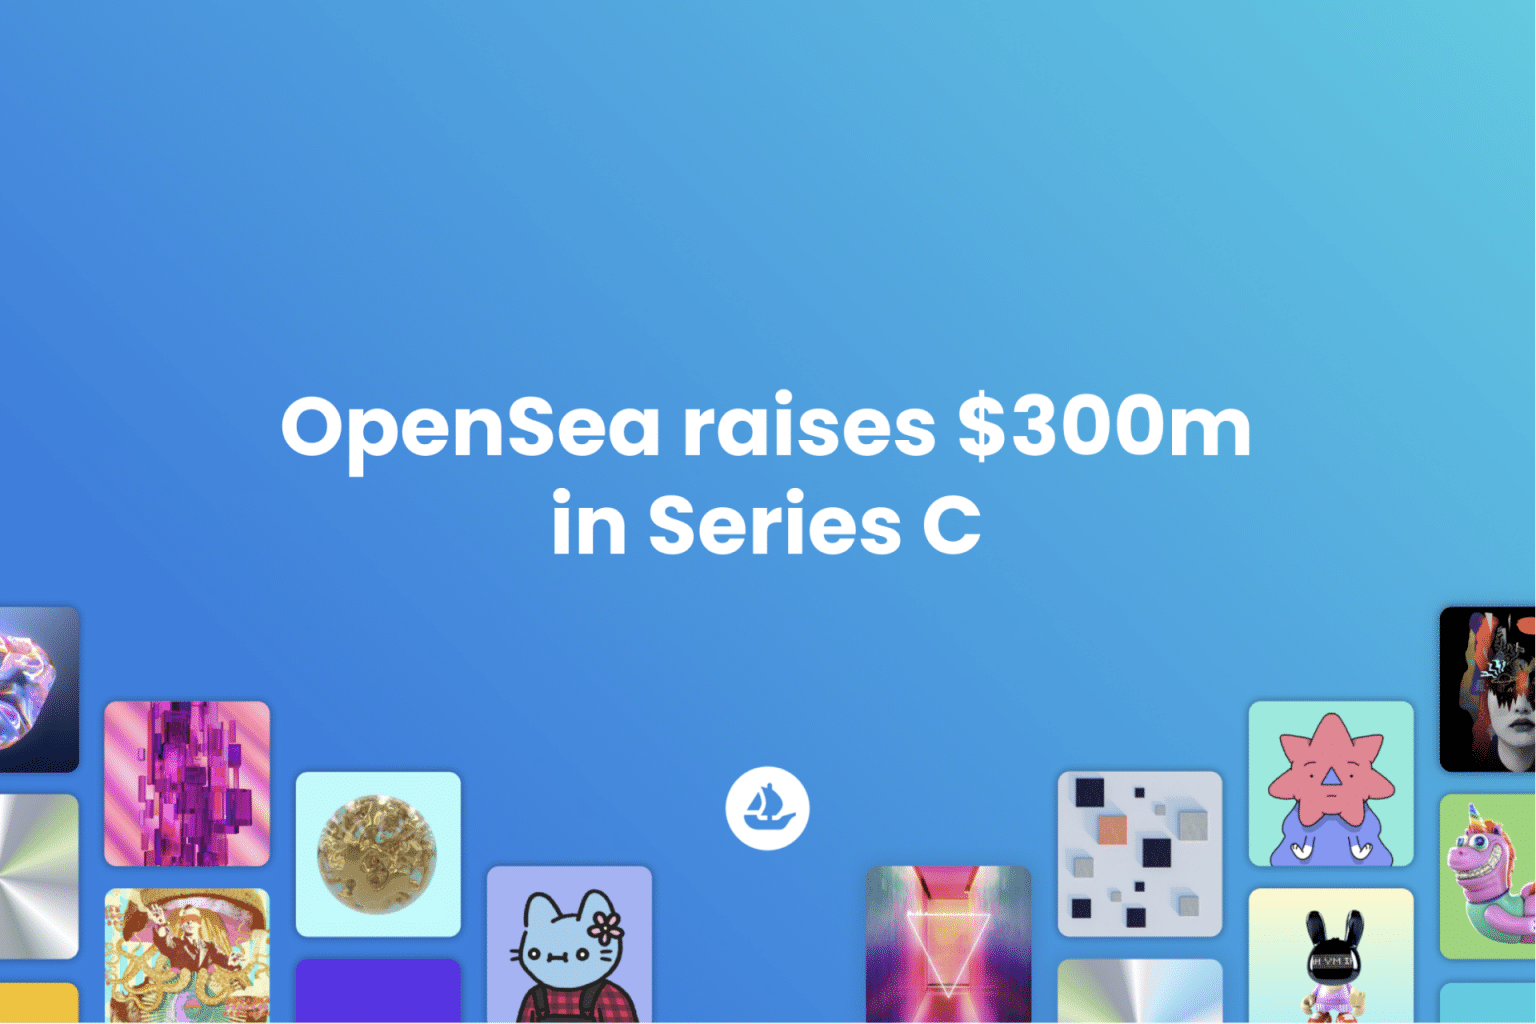 Leading NFT marketplace, OpenSea raises $300m in Series C